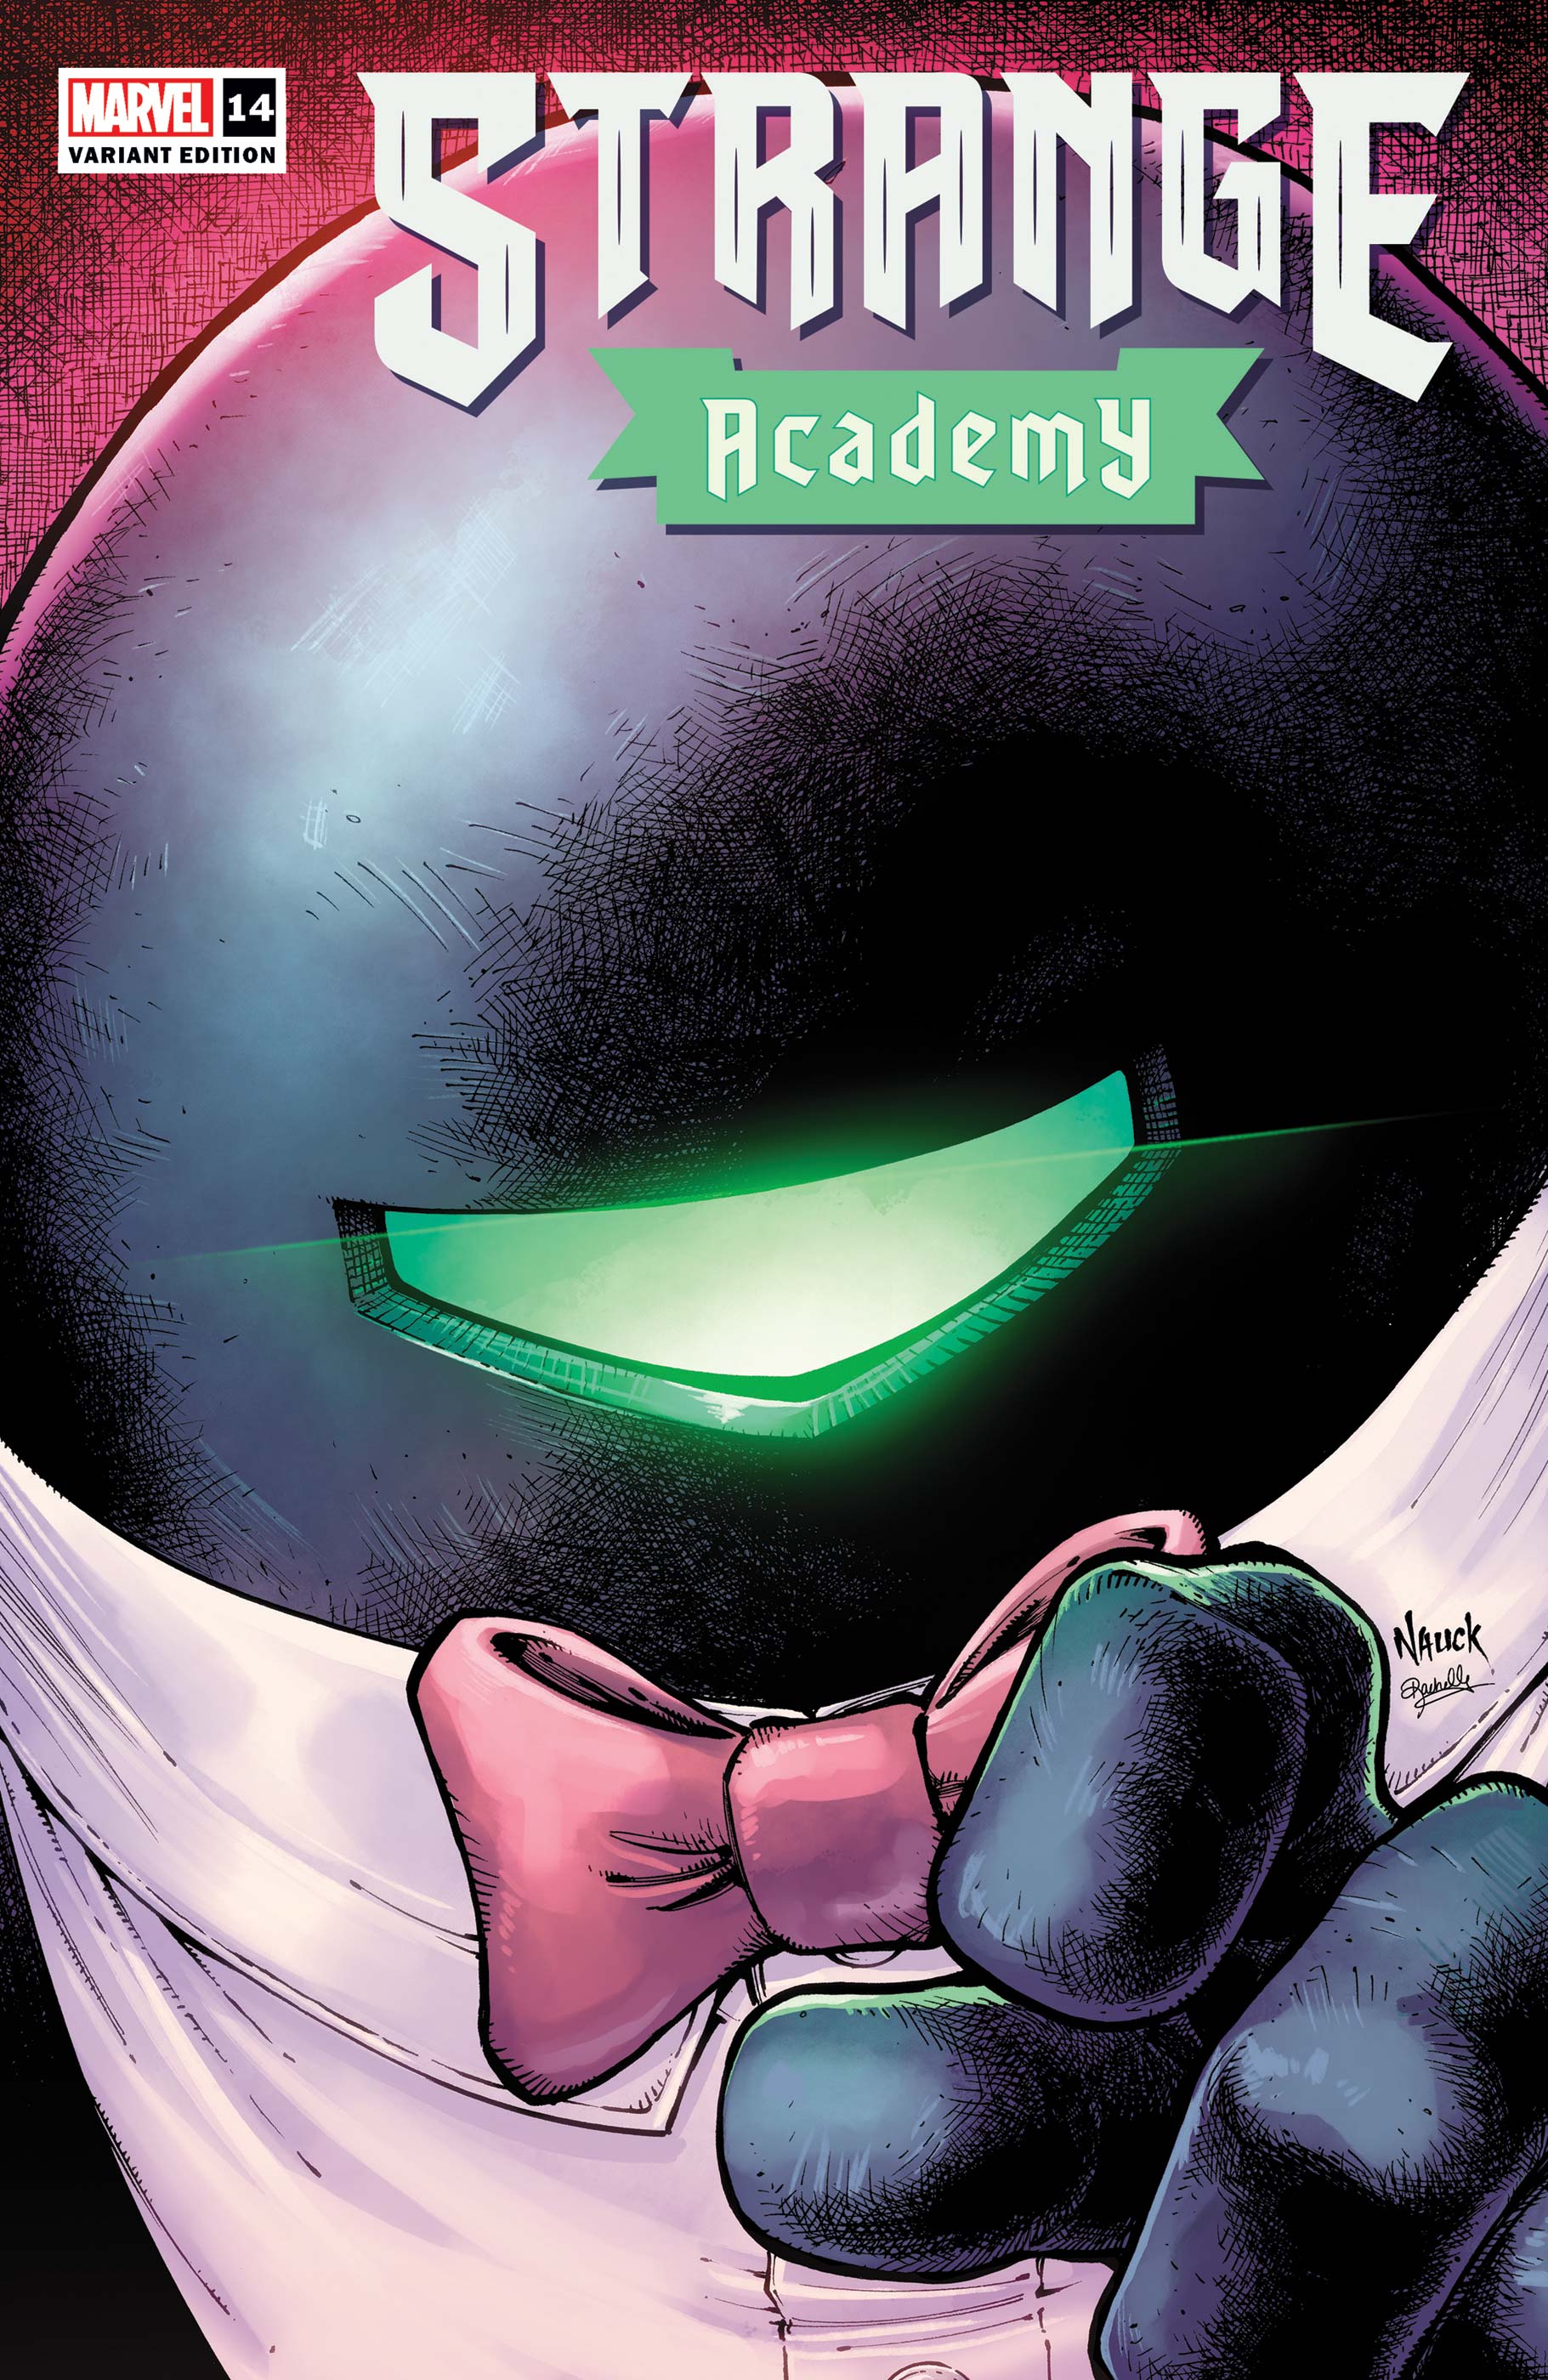 Strange Academy (2020) #14 (Variant)